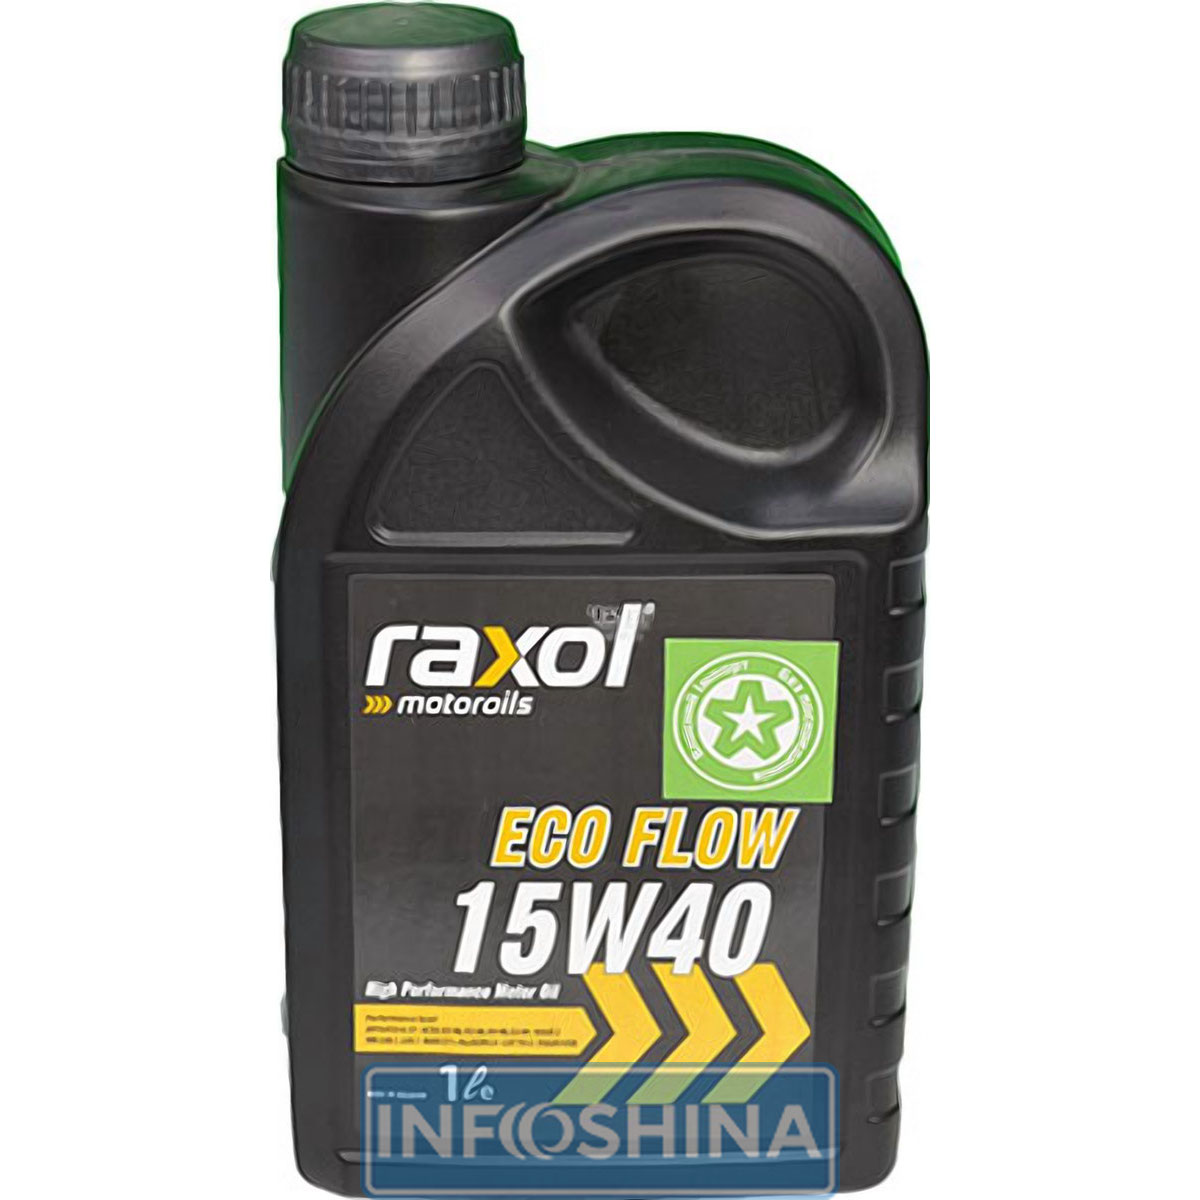 Купить масло Raxol Eco Flow 15W-40 (1л)